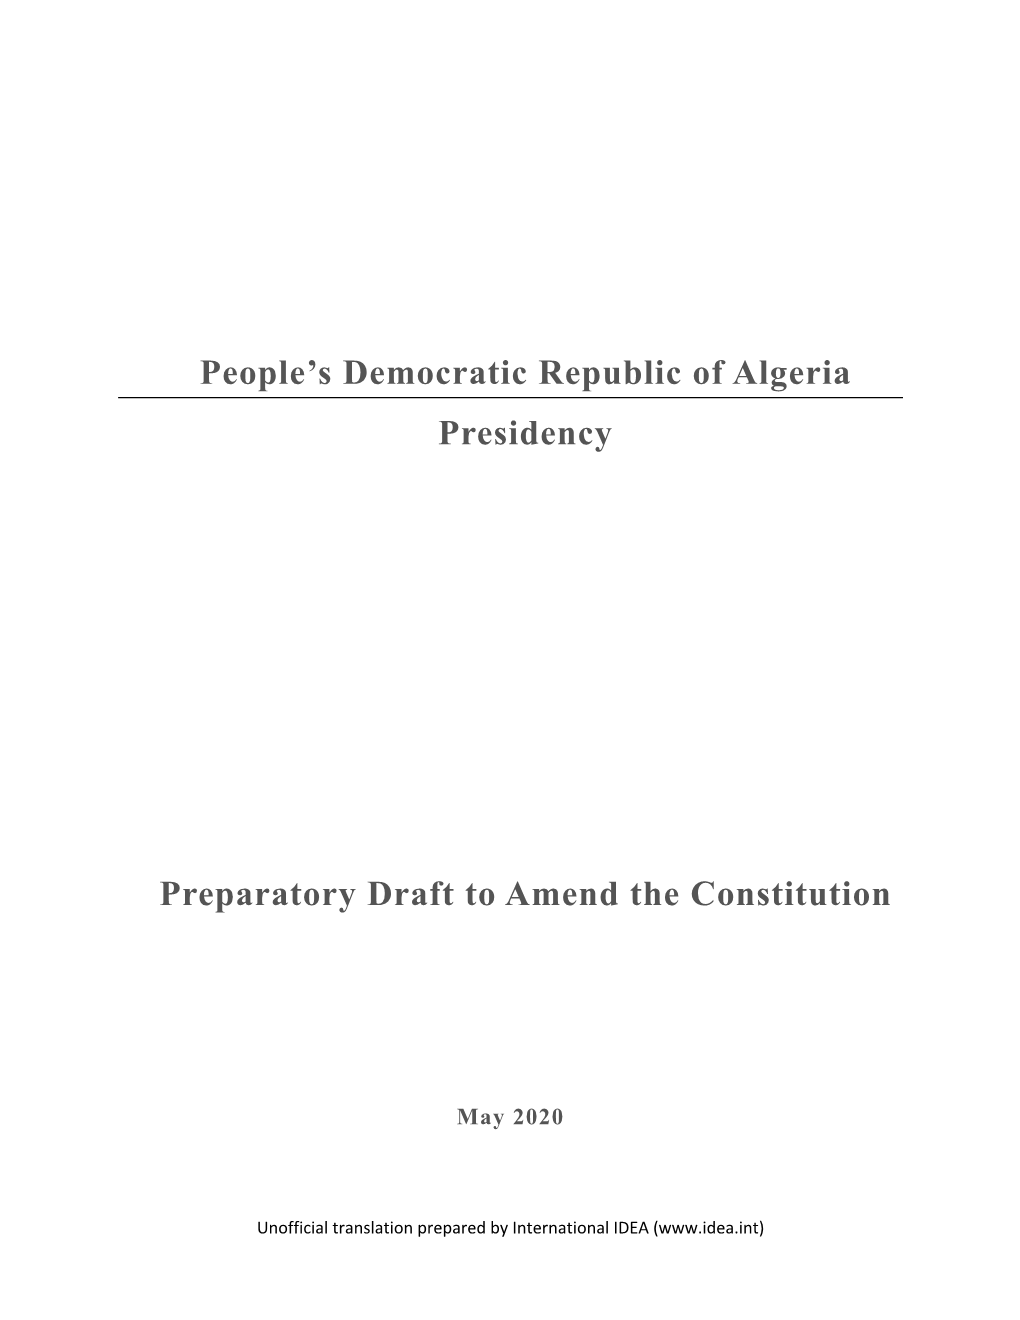 People's Democratic Republic of Algeria Presidency Preparatory